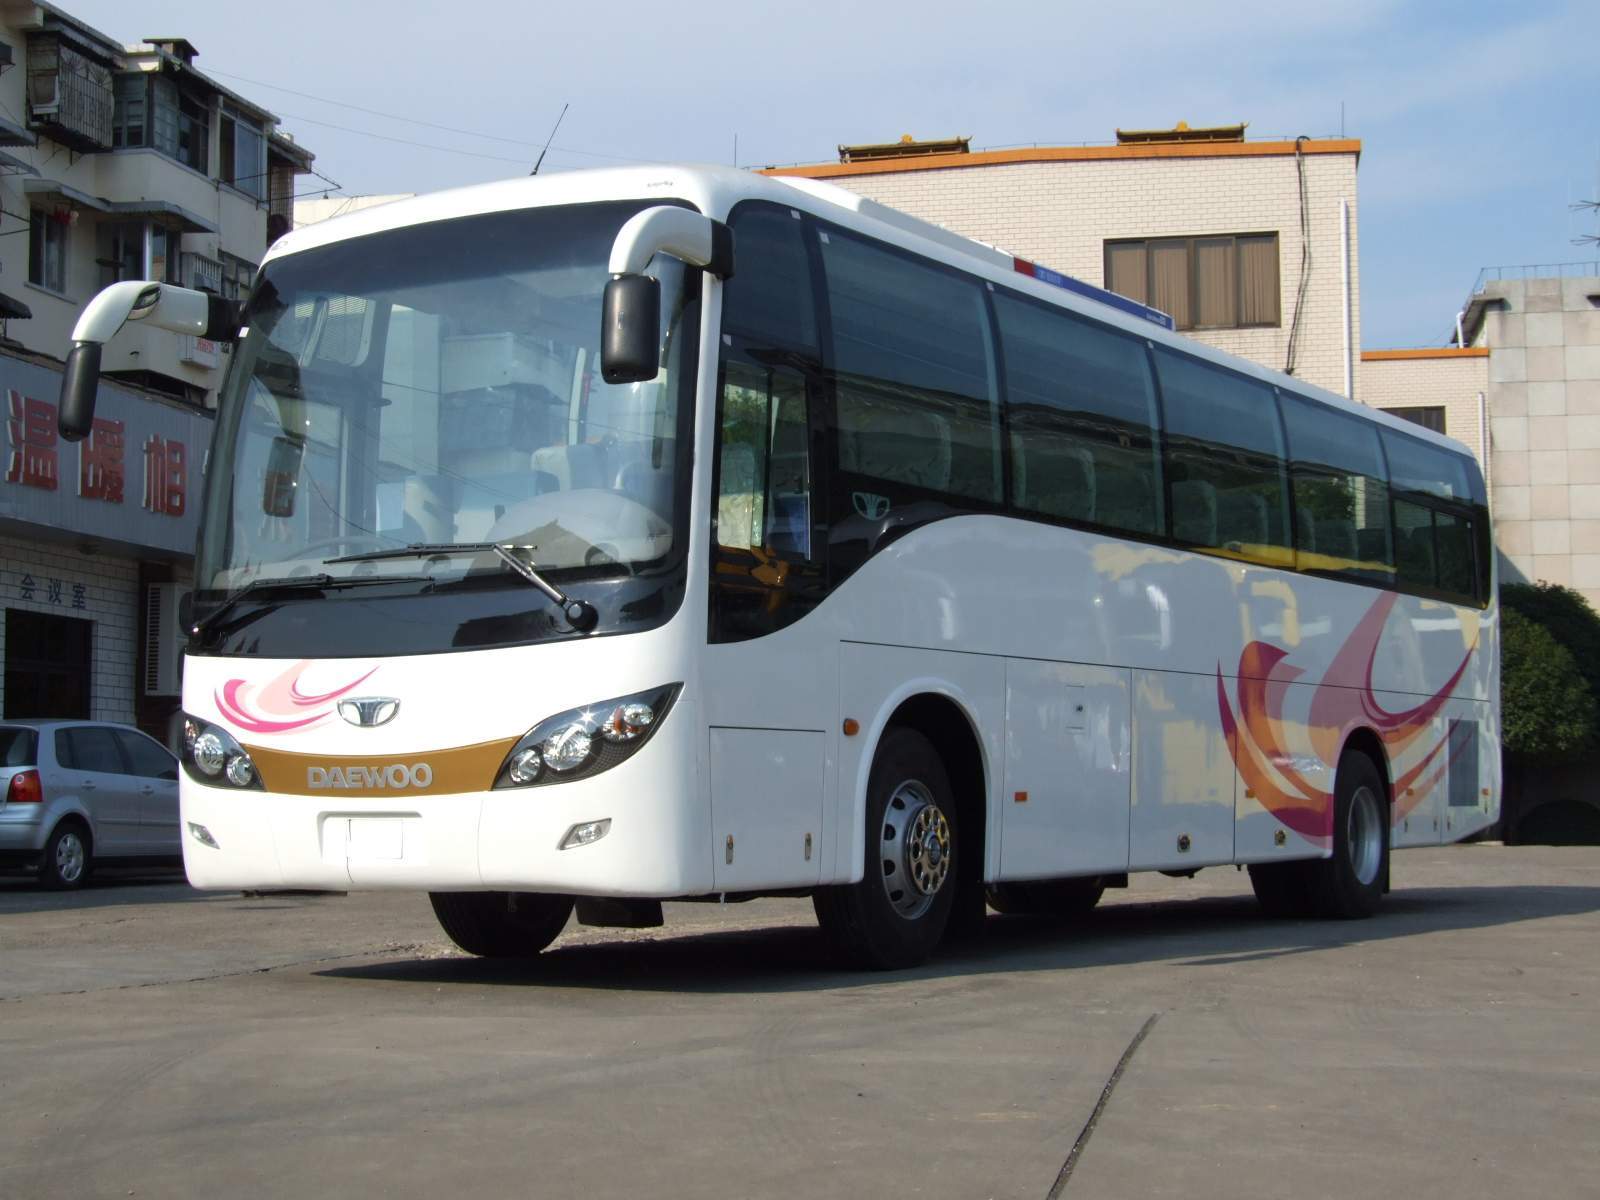 Daewoo bus